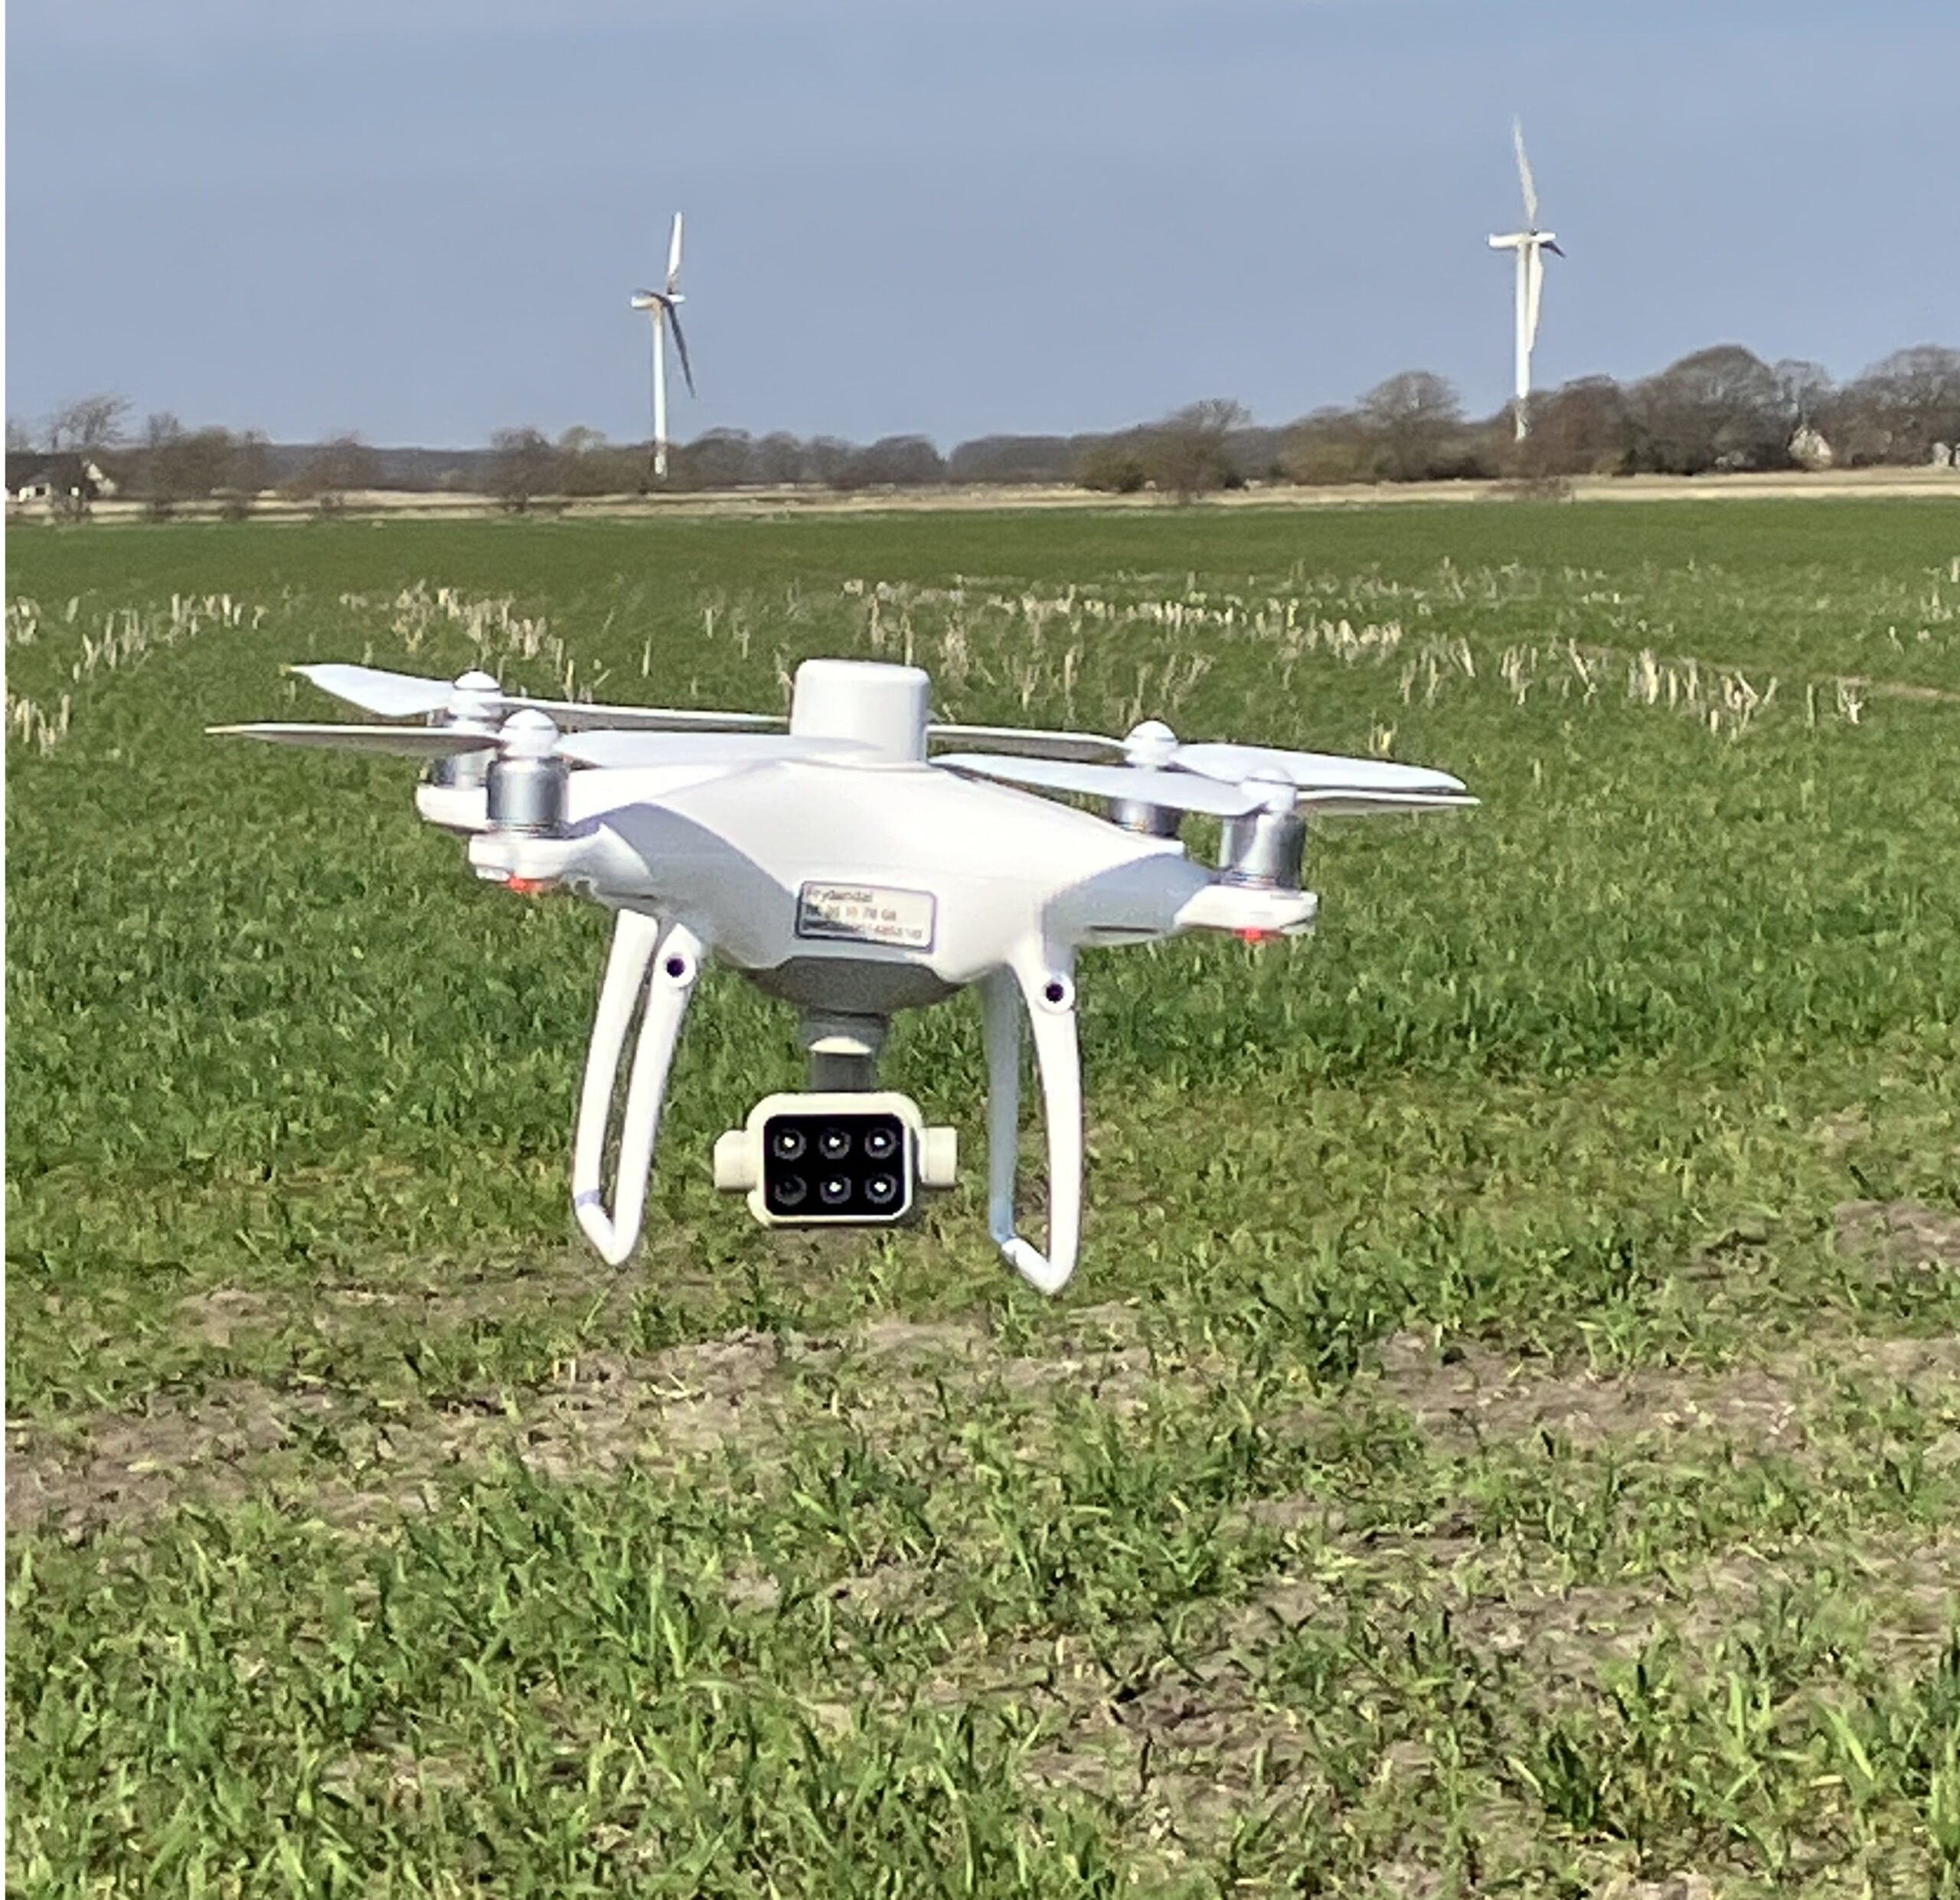 Dansk Planteinspektions drone